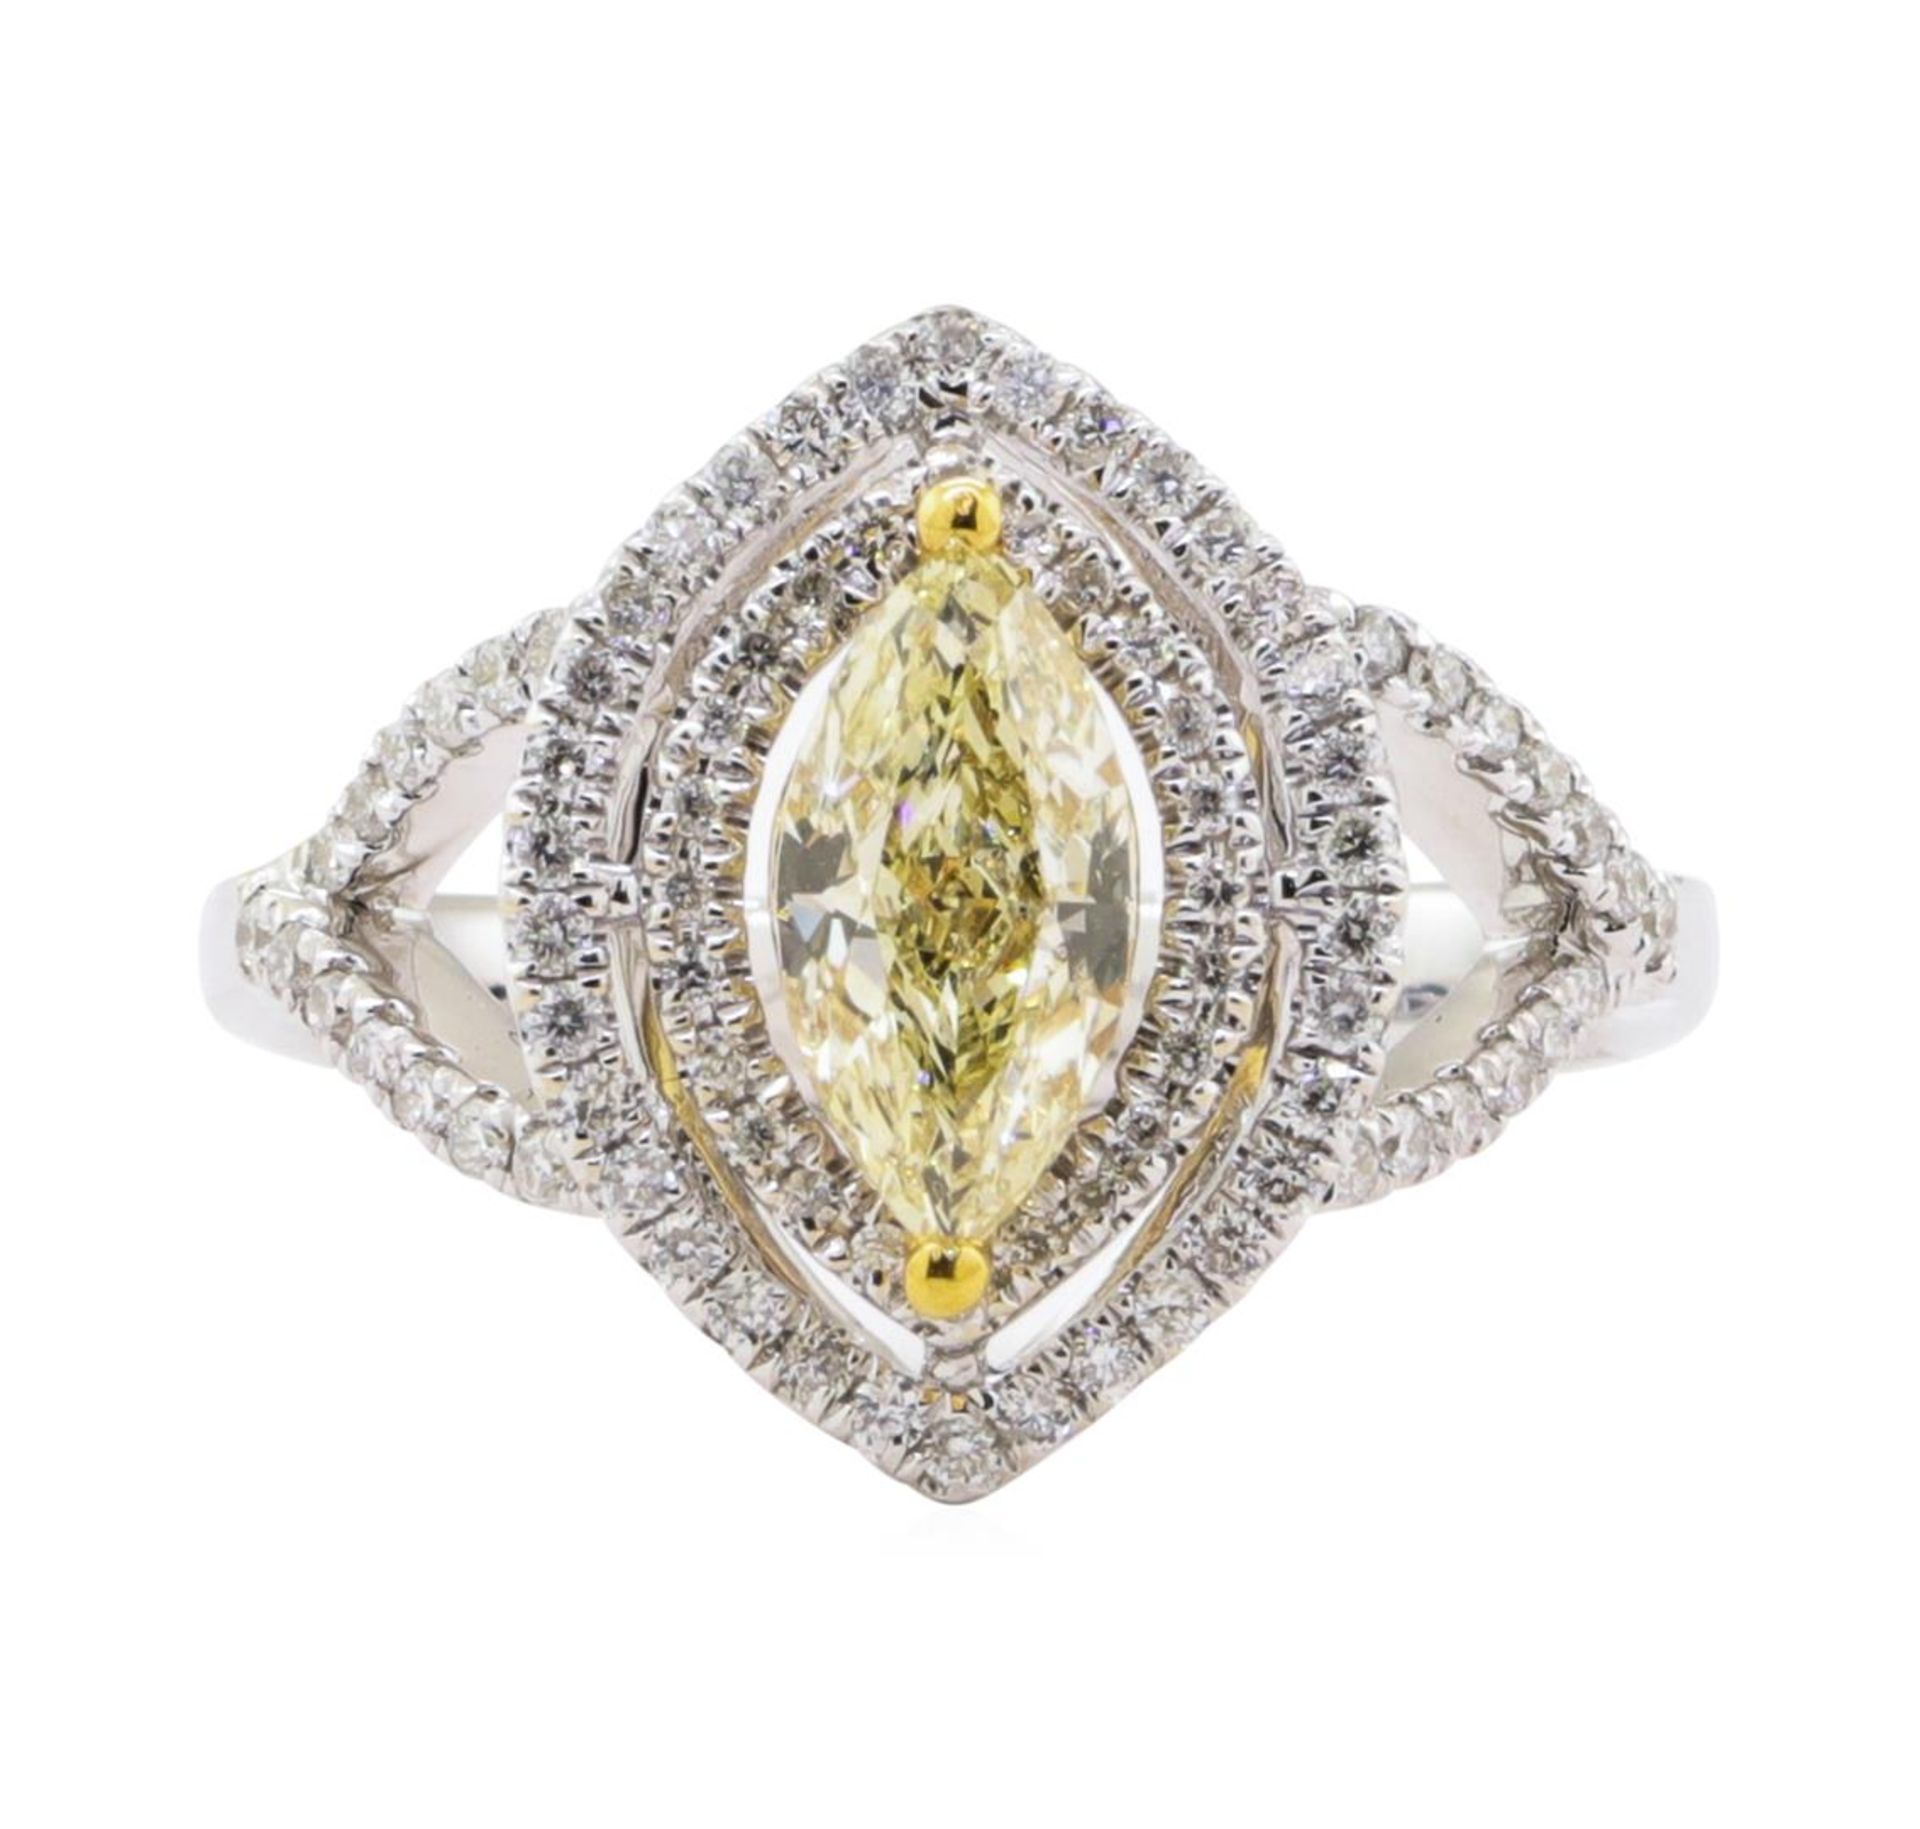 1.01ct Diamond Ring - 18KT White Gold - Image 2 of 5